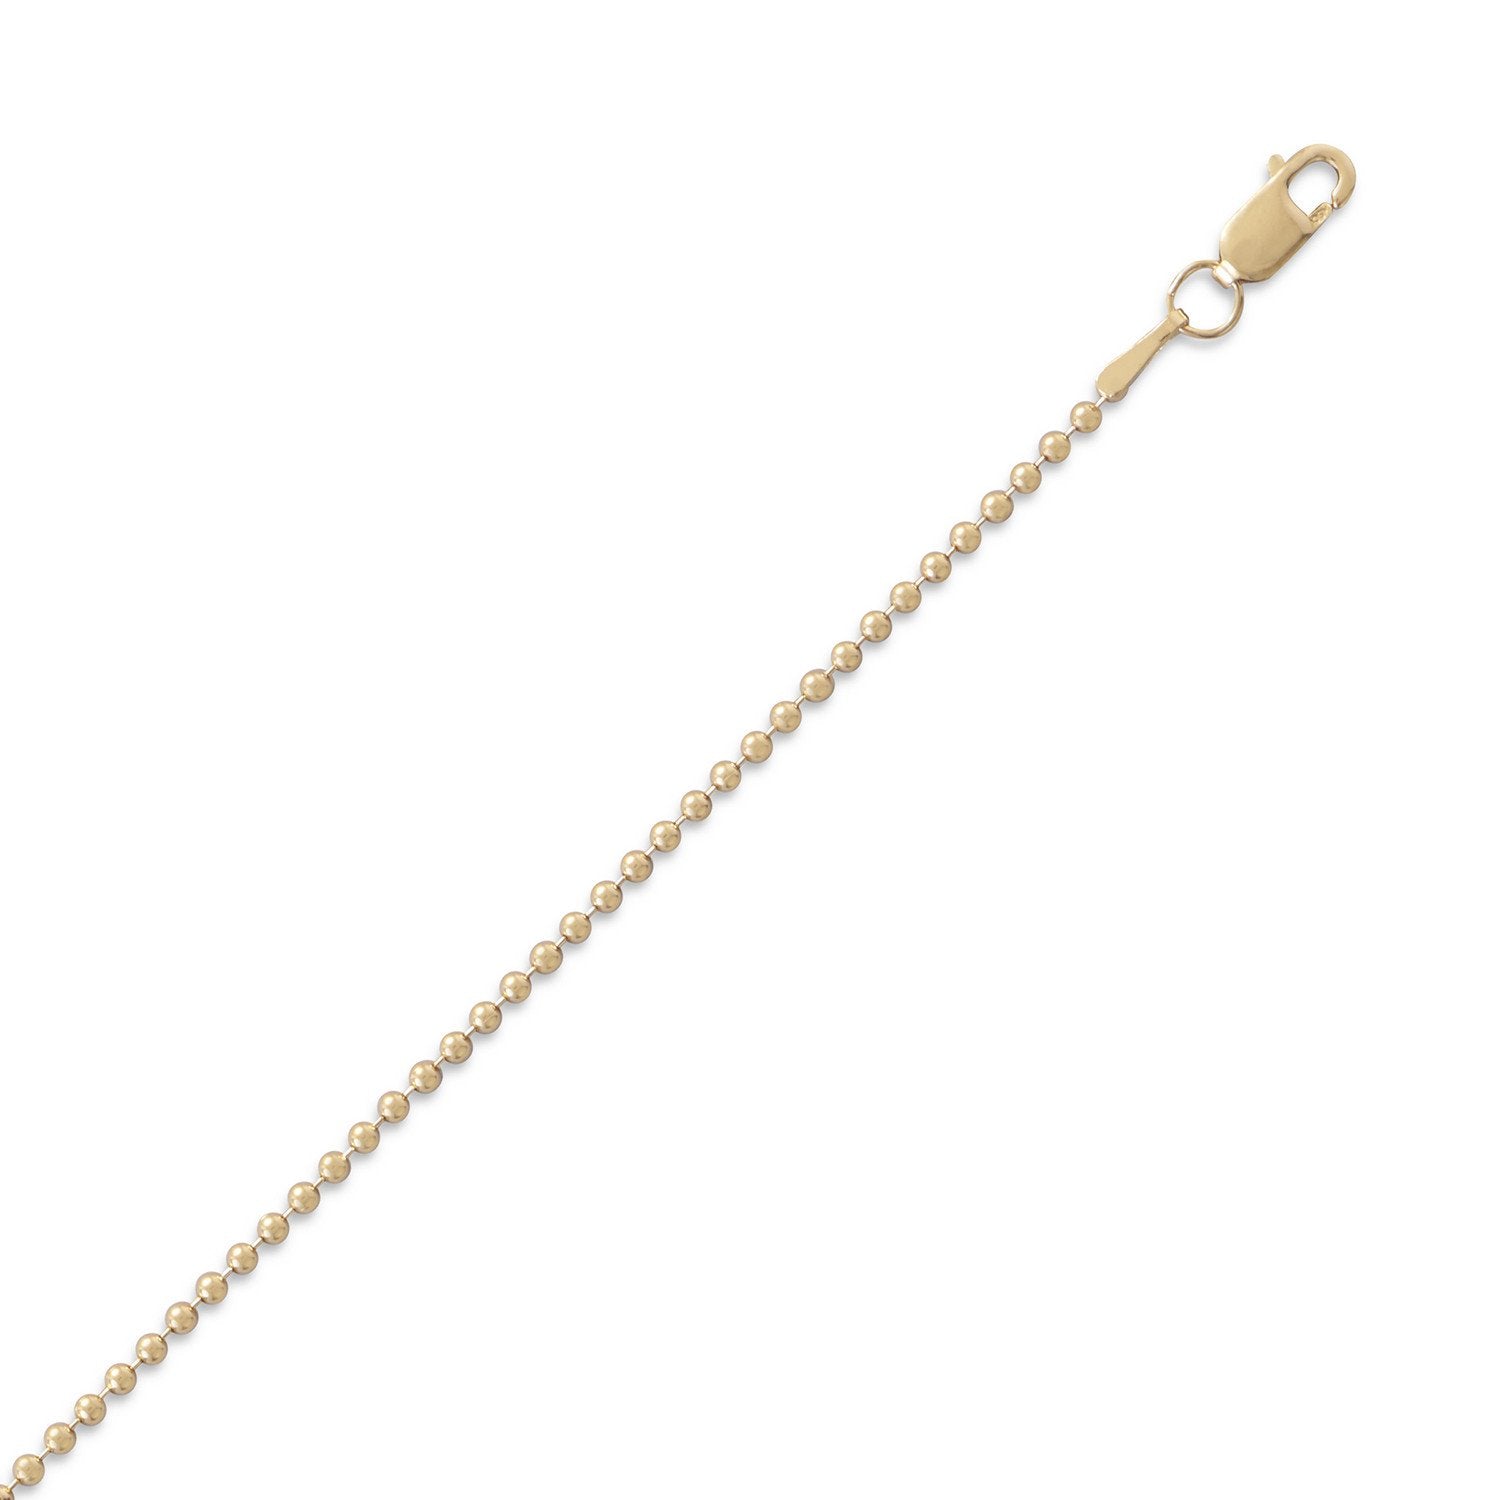 14/20 Gold Filled Bead Chain (1.5mm) - Joyeria Lady